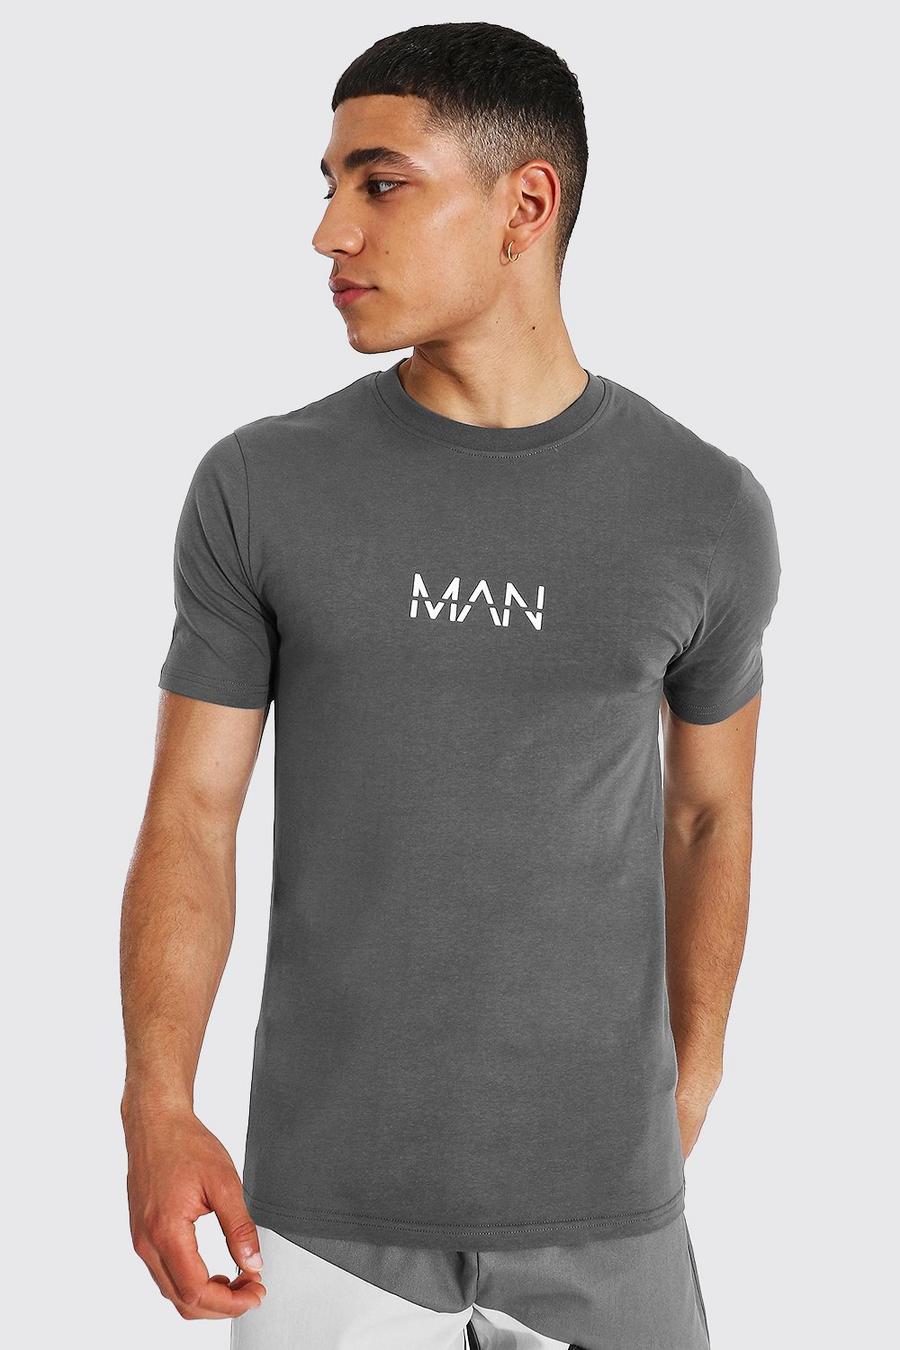 Camiseta MAN Original ajustada al músculo, Charcoal image number 1